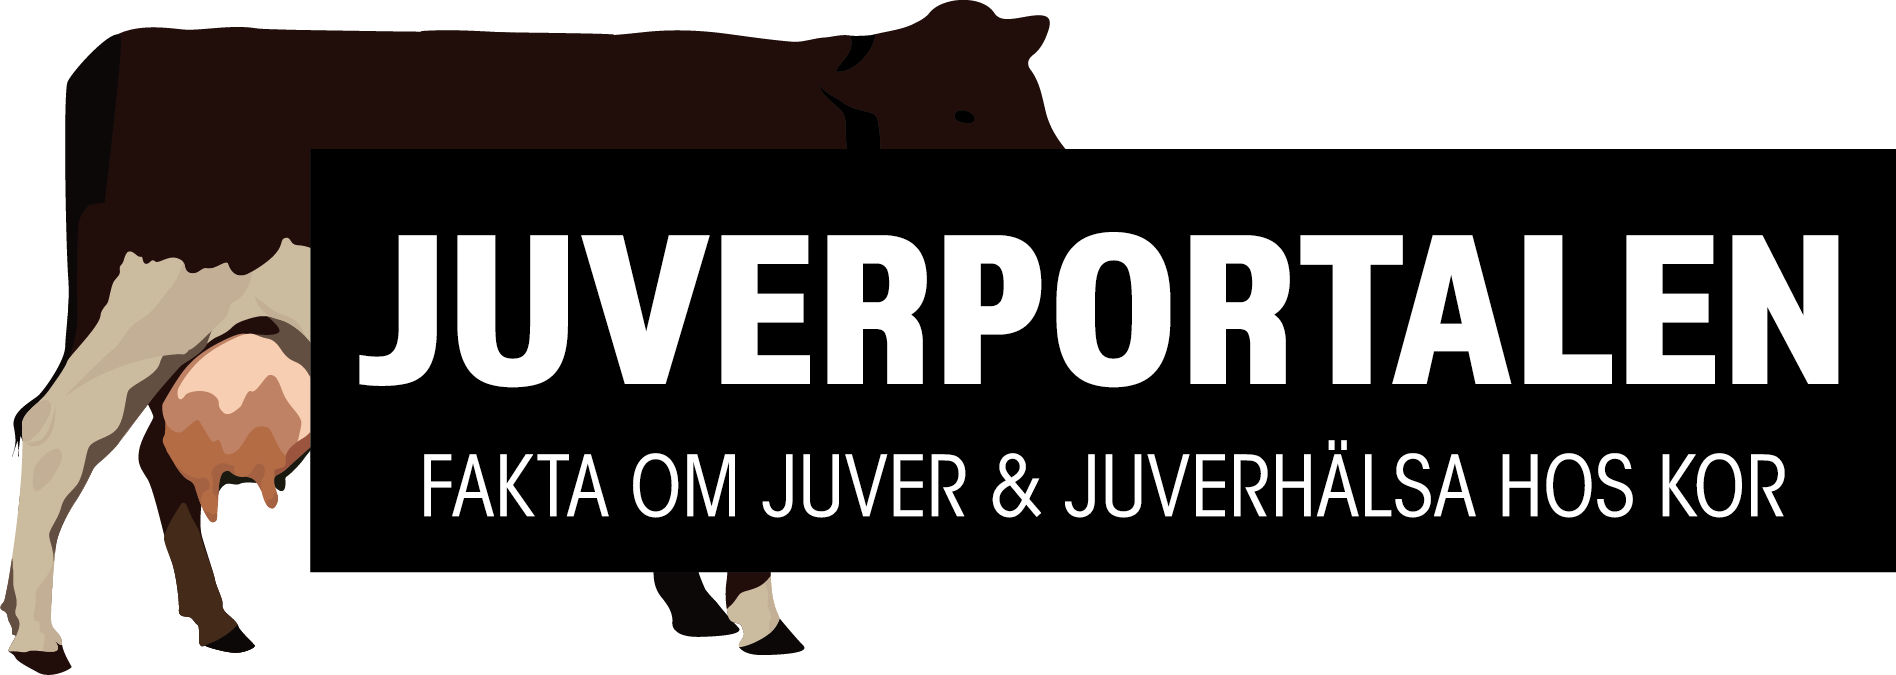 Juverportalen logo